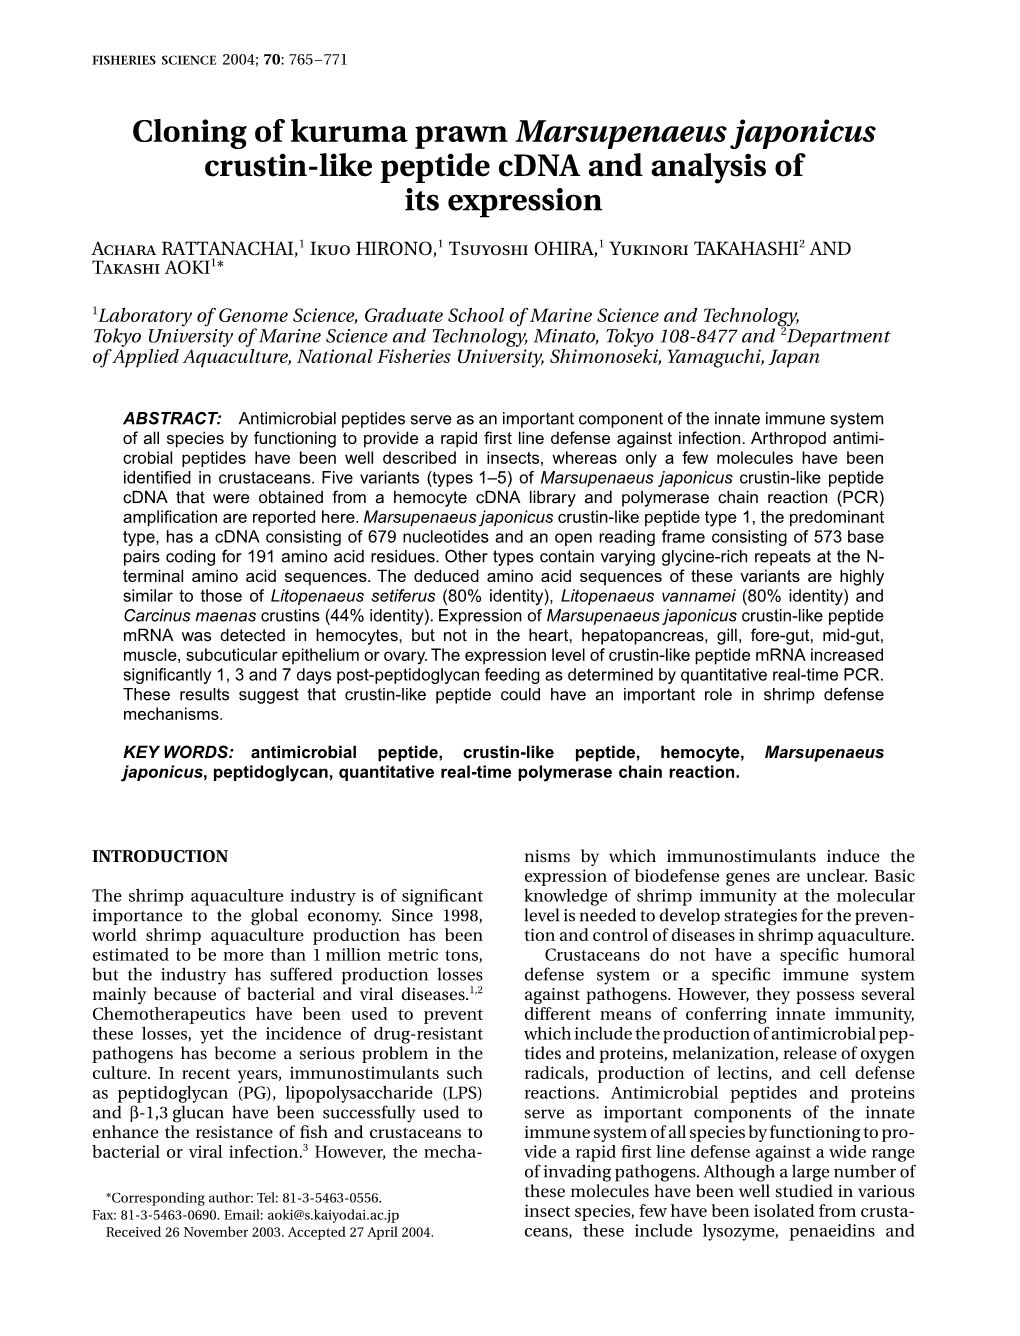 Cloning of Kuruma Prawn Marsupenaeus Japonicus Crustin-Like Peptide Cdna and Analysis of Its Expression